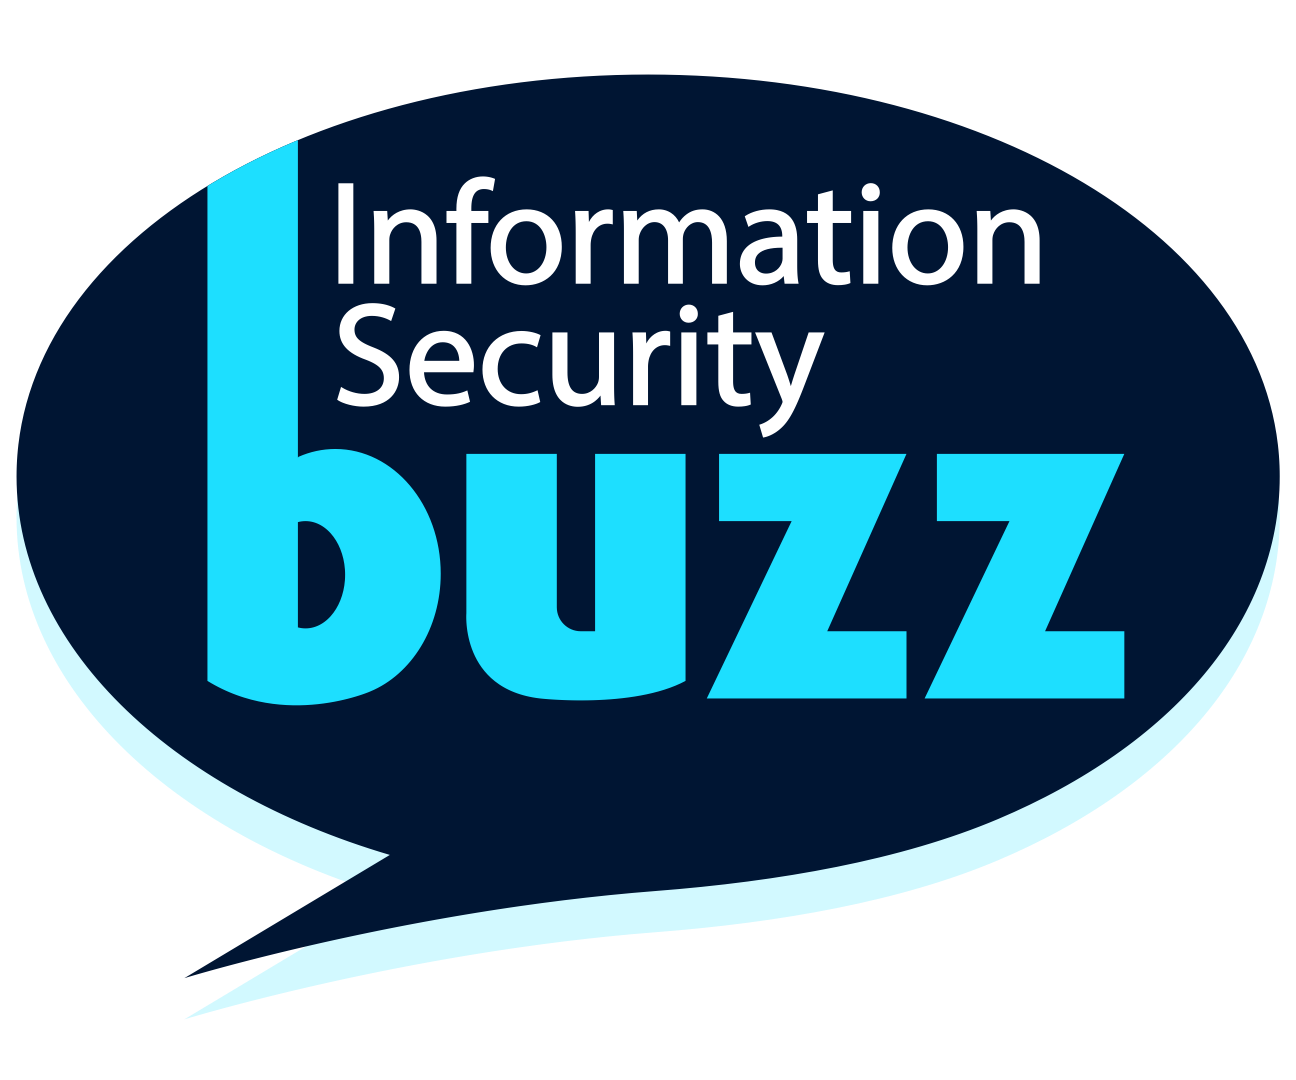 information security buzz logo